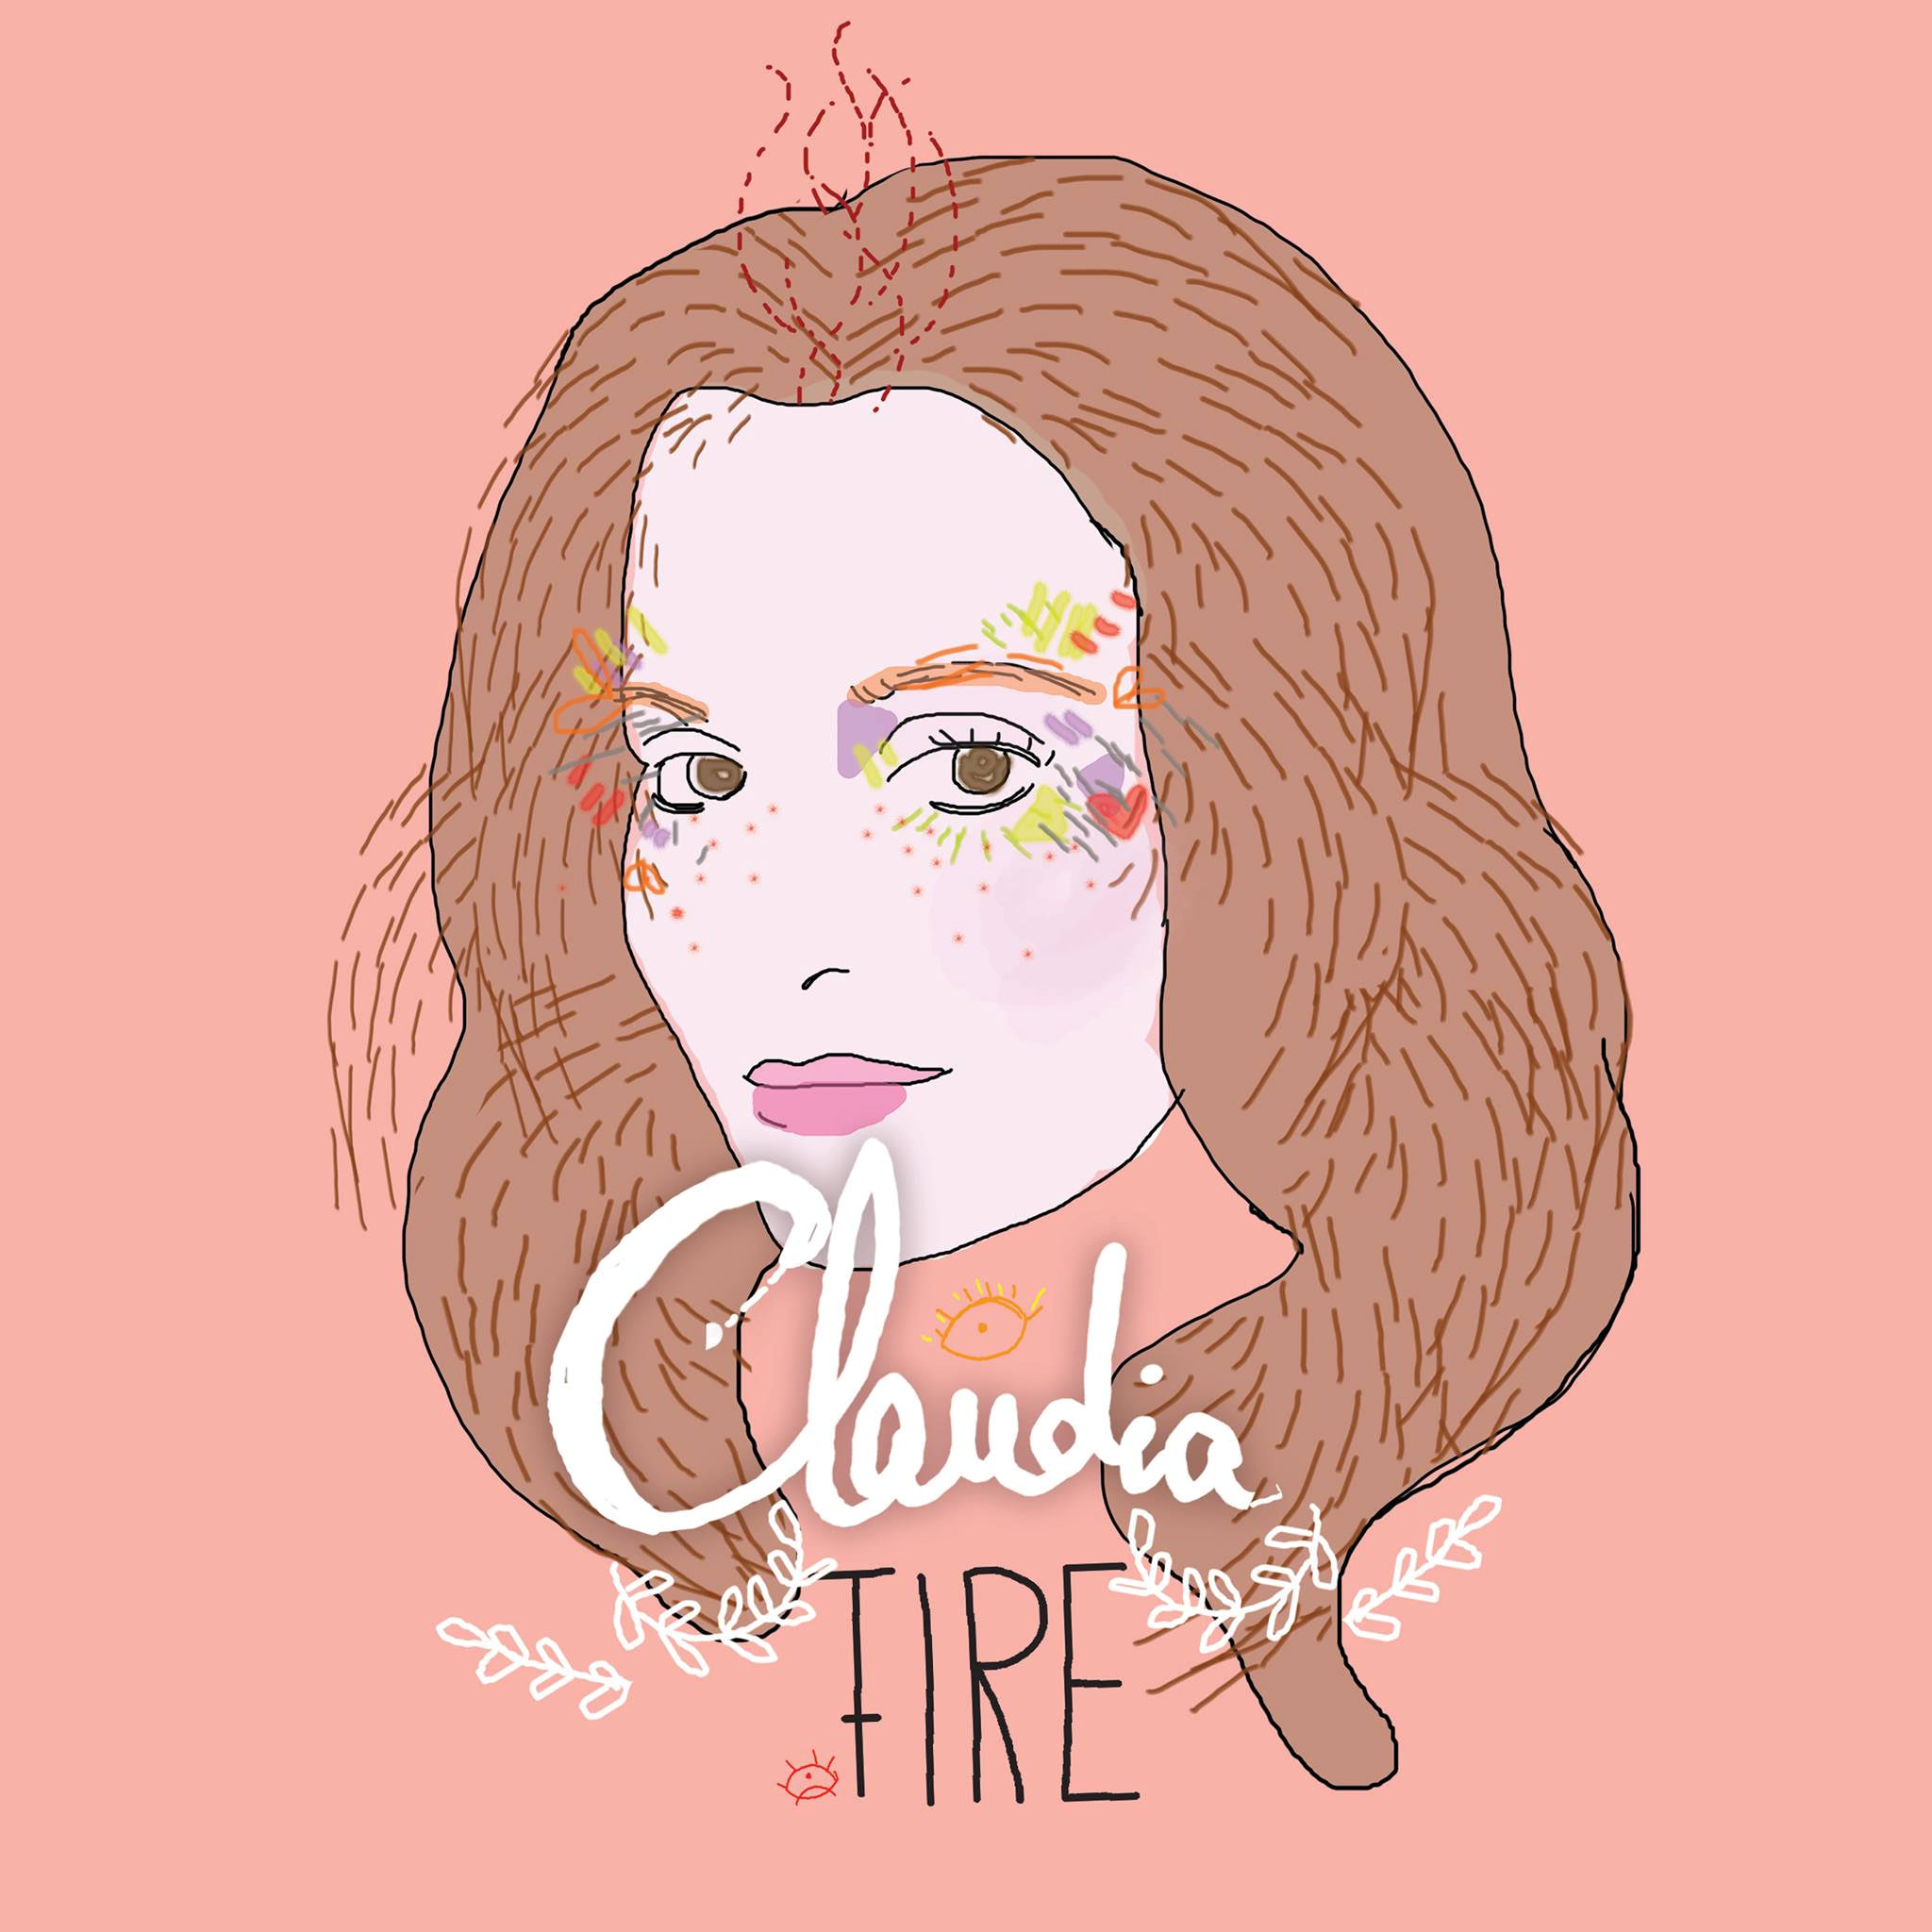 Claudia Fire